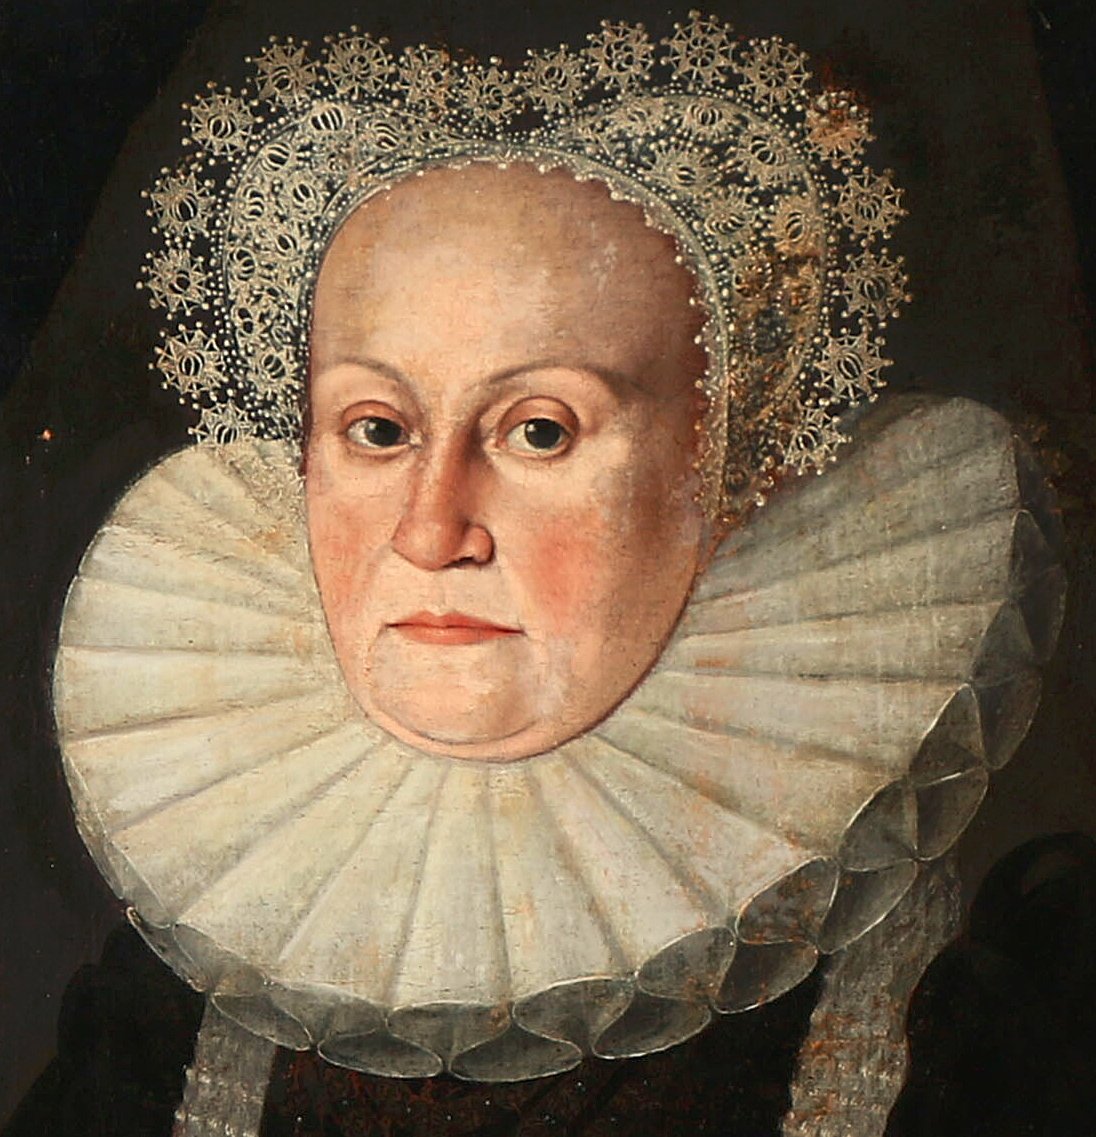 Born #OnThisDay in 1557: #SophieofMecklenburgGüstrow (1557-1631), Queen of Denmark & Norway as spouse of #FrederickII 

Portrait by an Unknown Artist, 17th Century

#MecklenburgSchwerin #Oldenburg